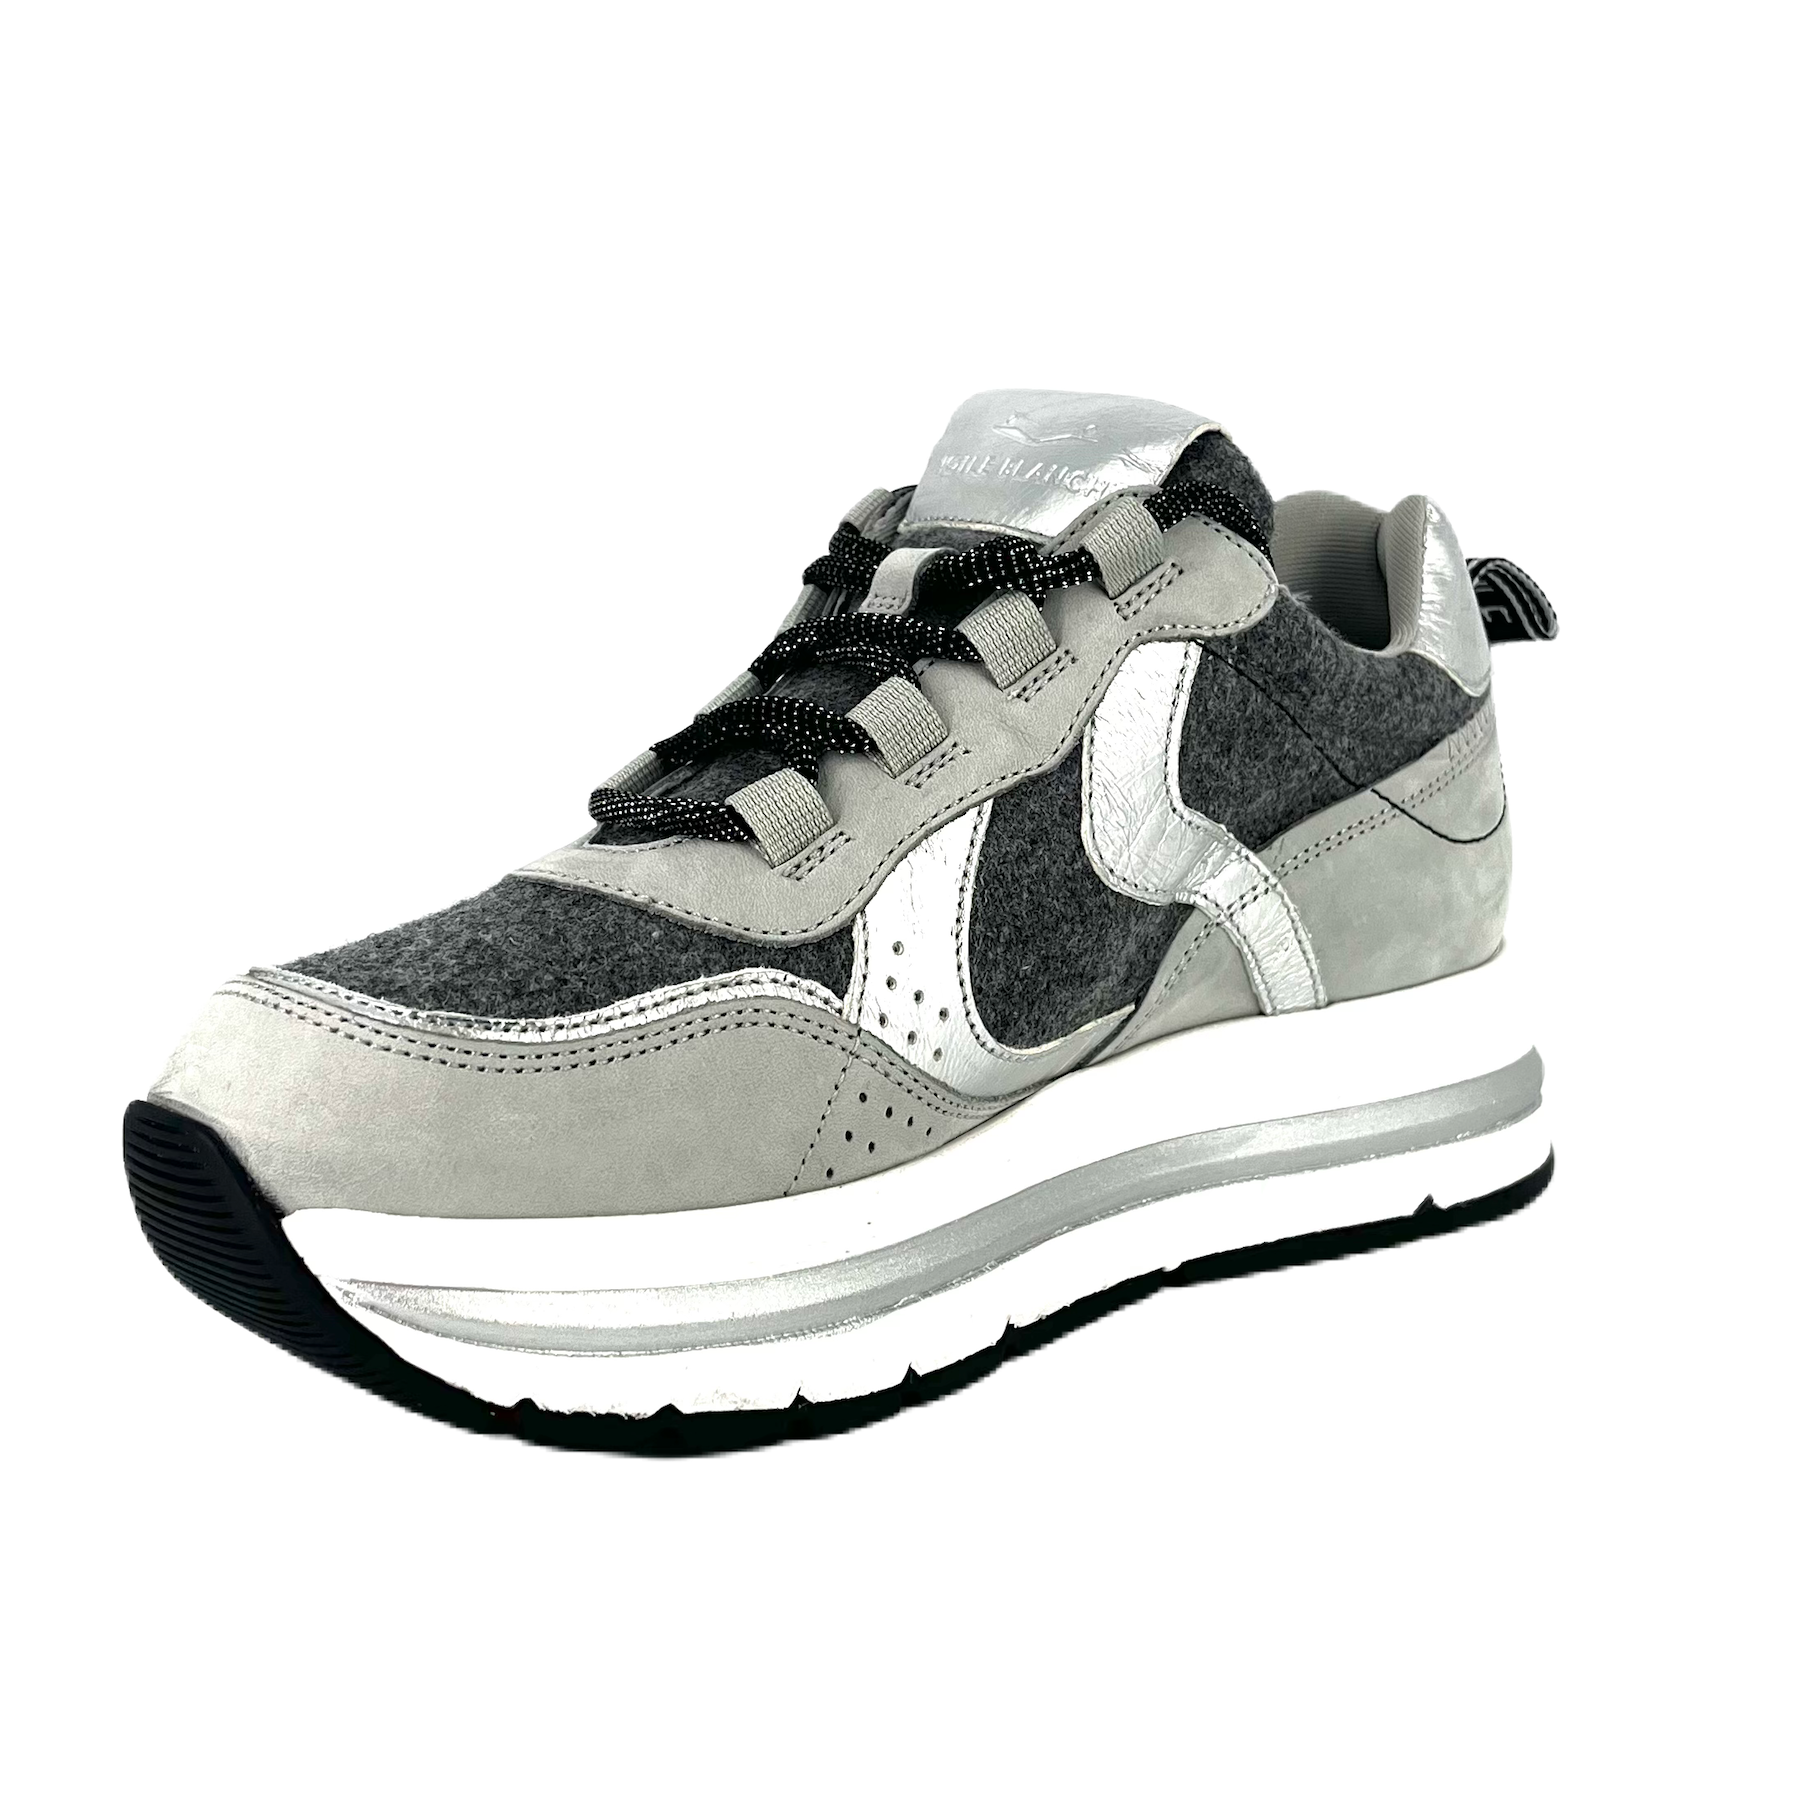 Sneakers De La Marca Voile Blanche Modelo Marple Gray Nubuk/Felt